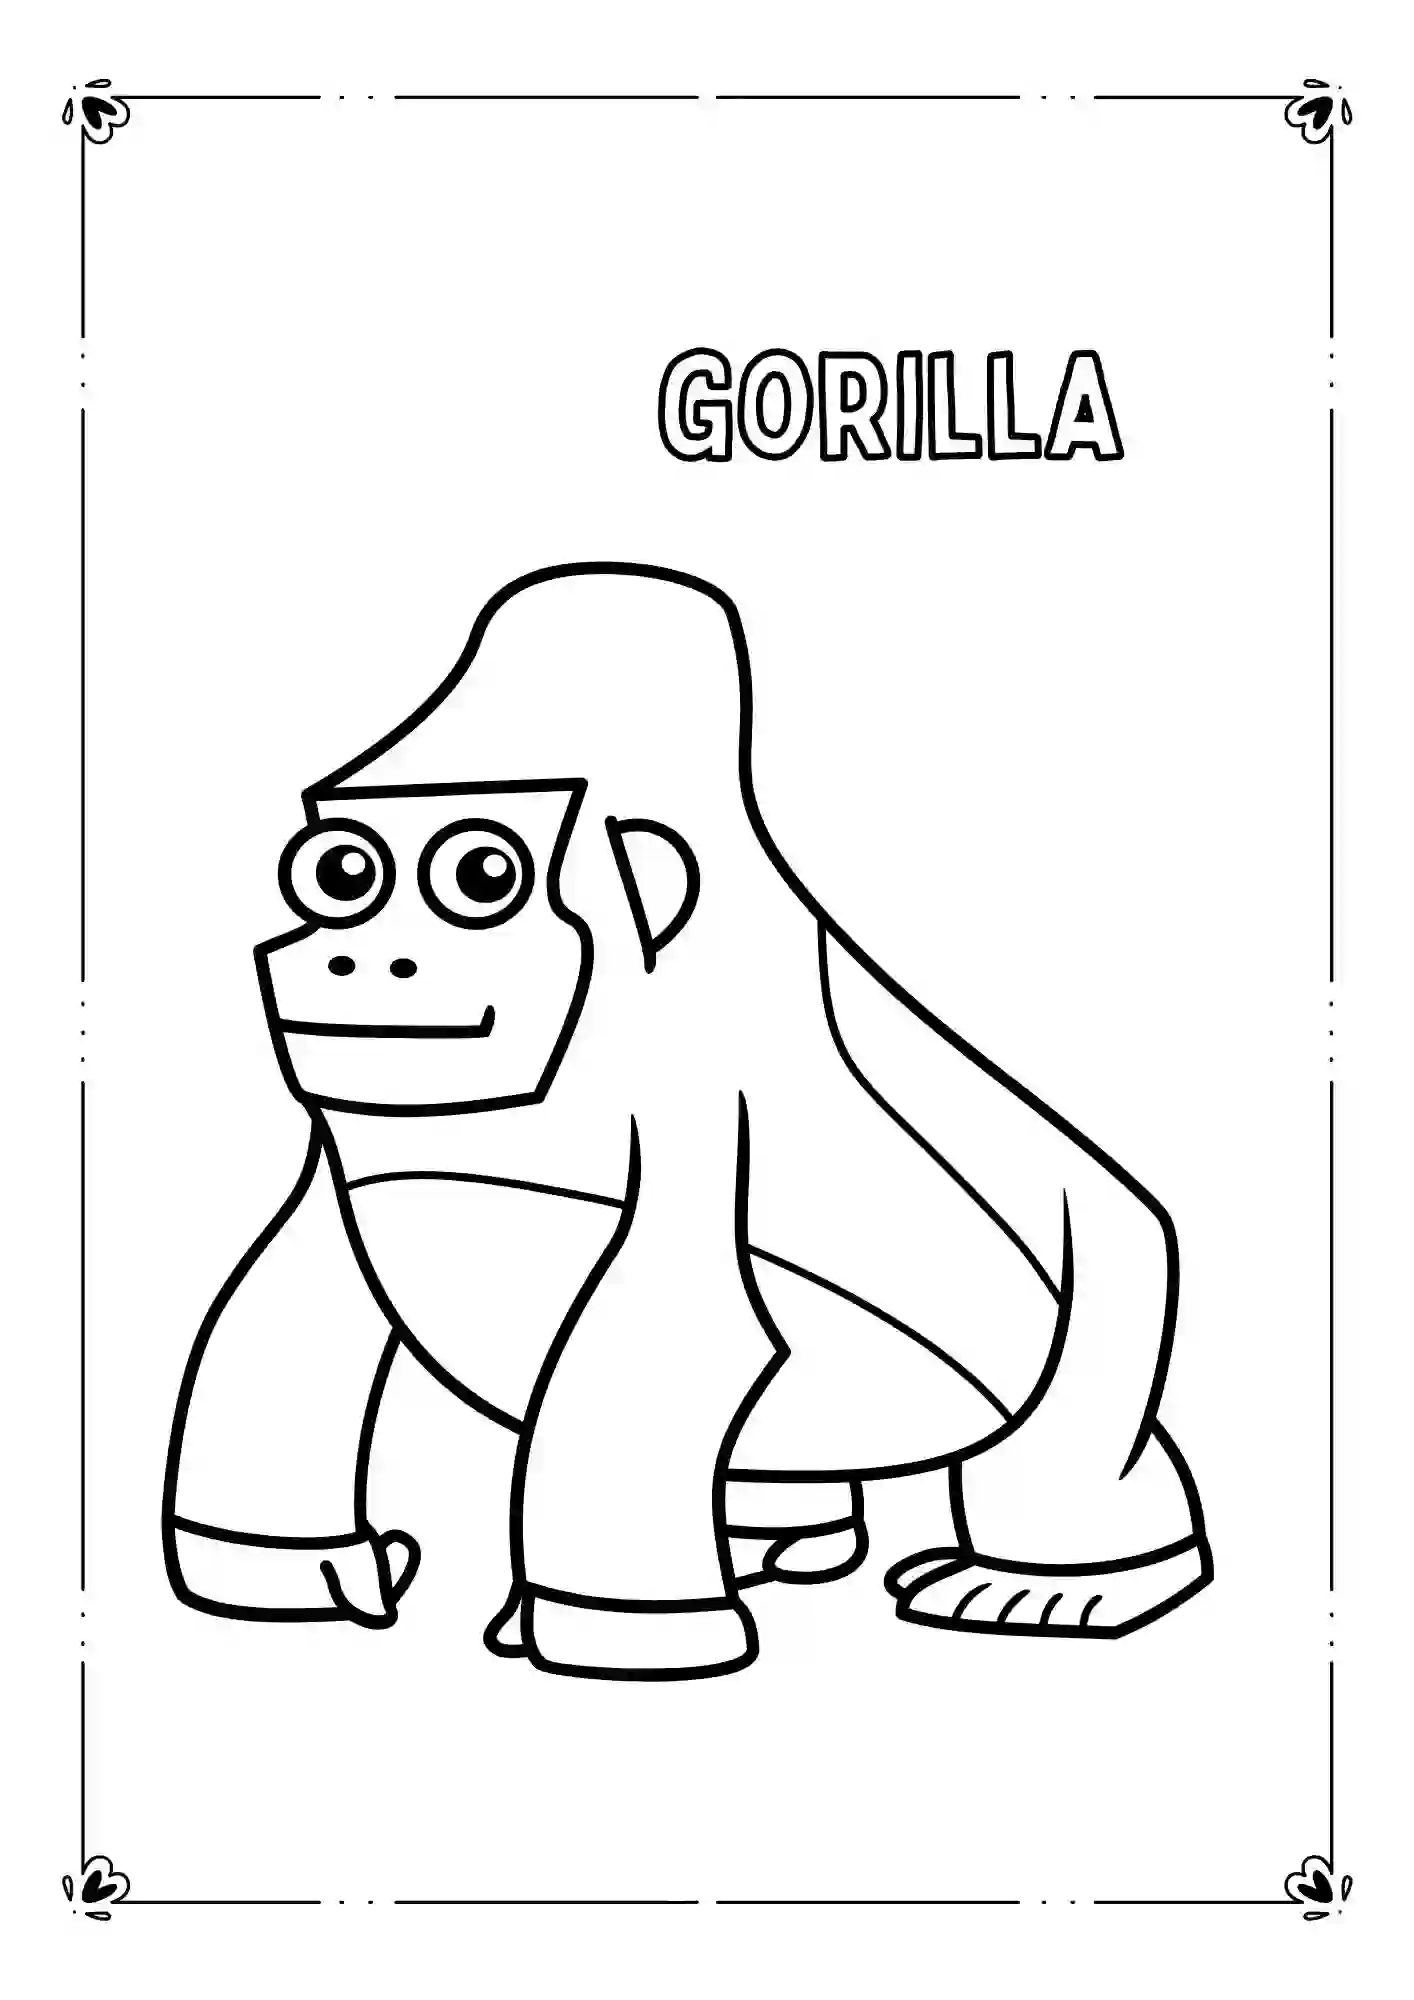 Wild Life Animals Coloring Worksheets (GORILLA)